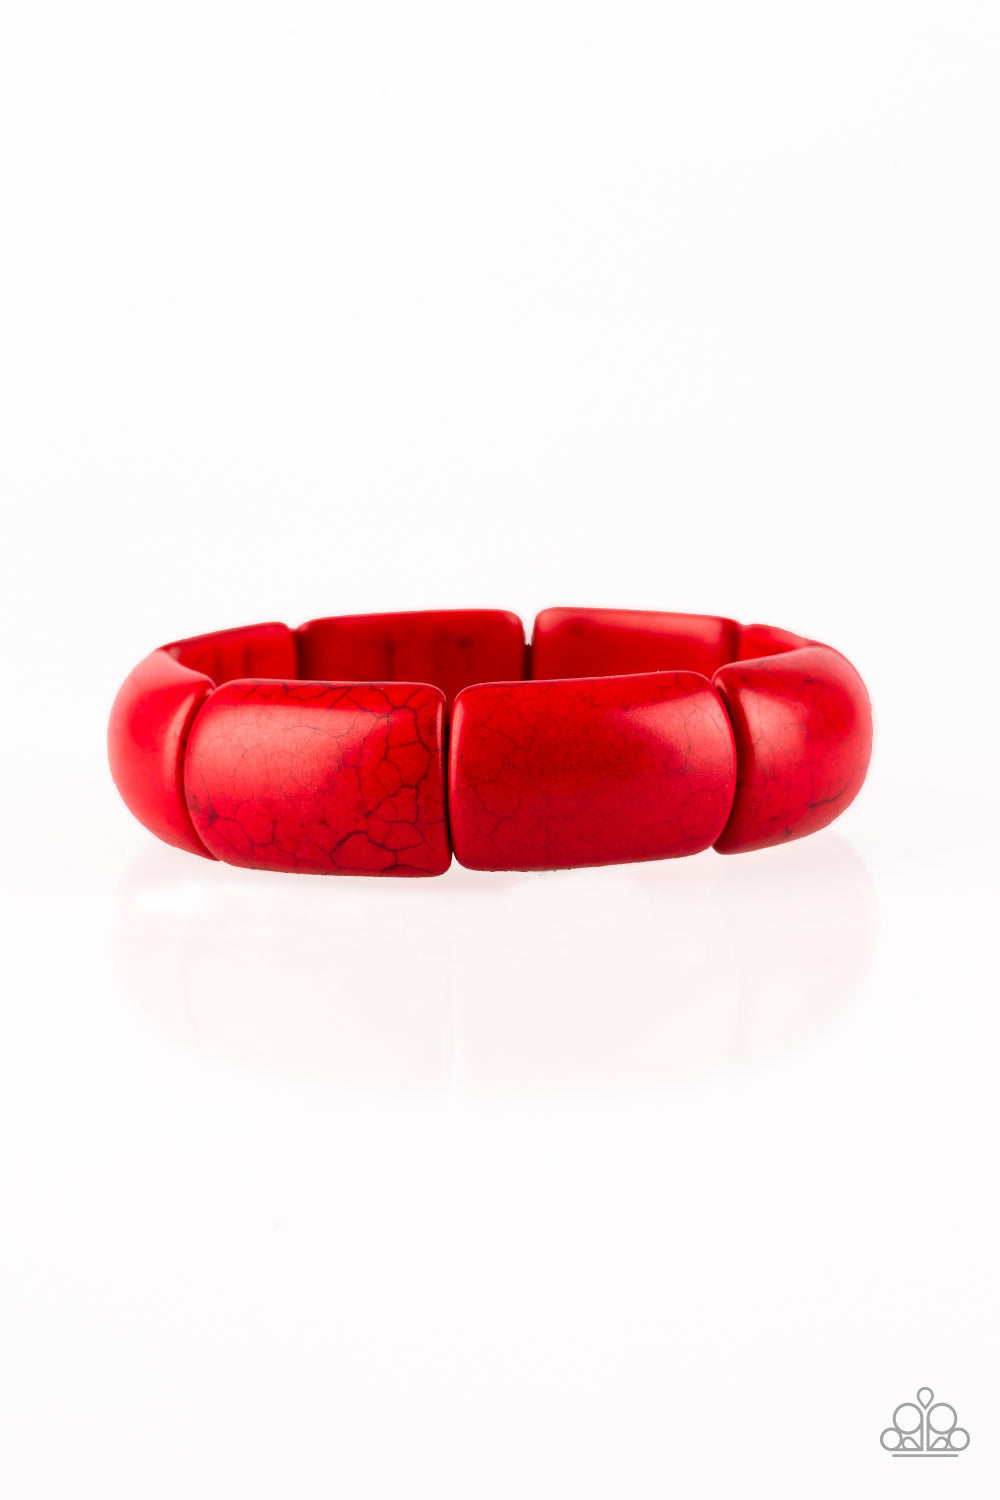 Peace Out - Red Stone Bracelet - Princess Glam Shop